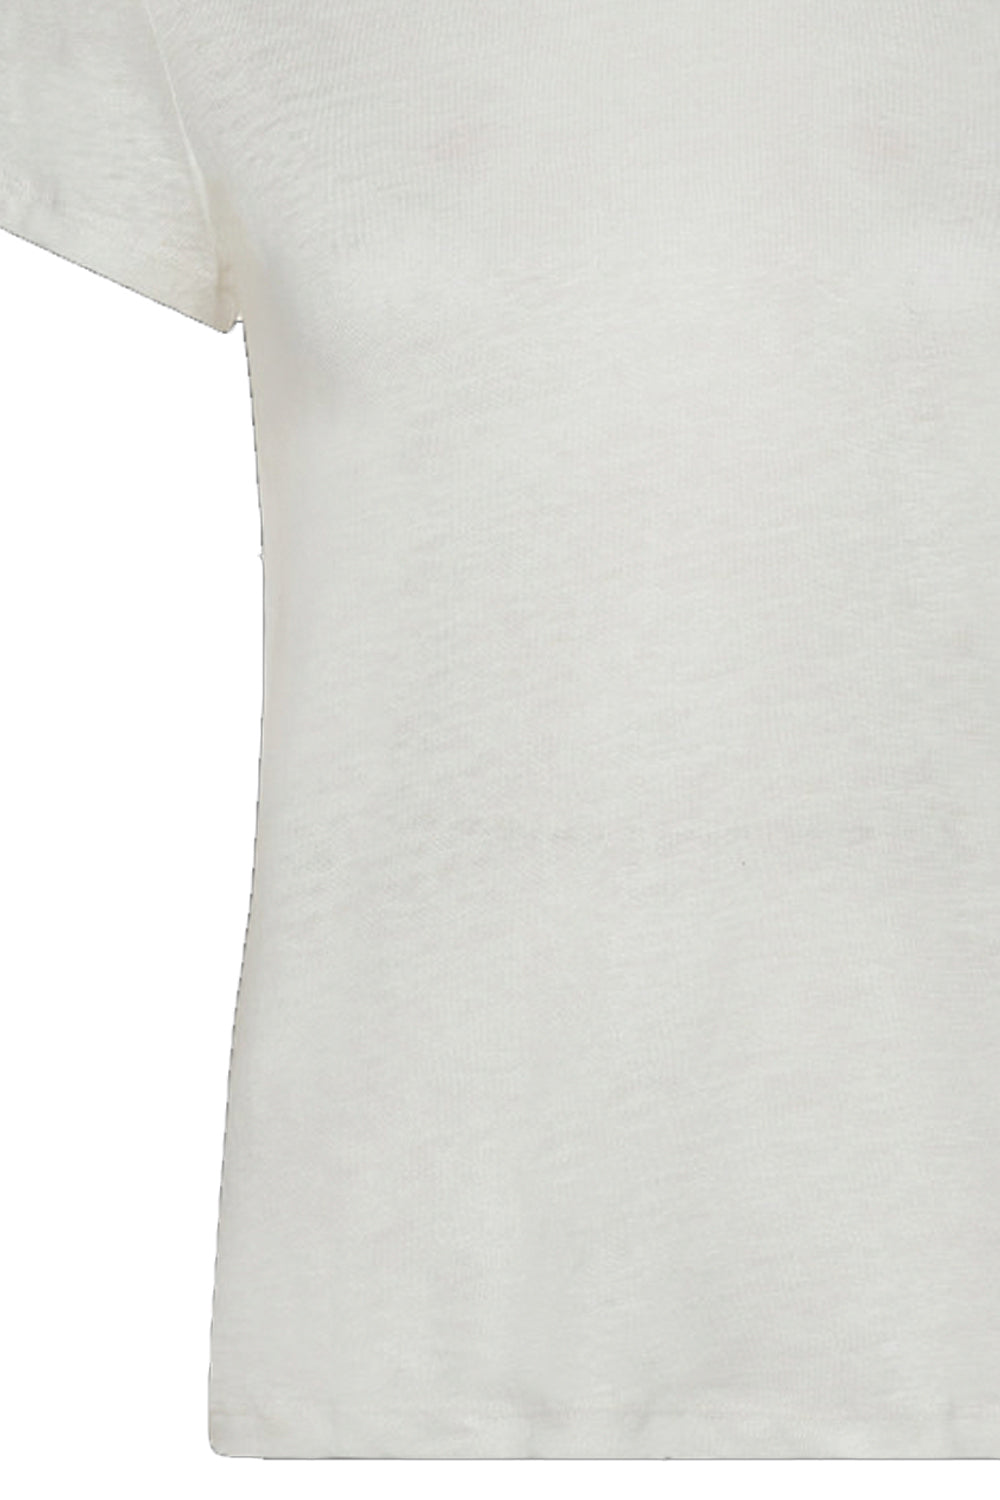 Tshirt in lino mezza manica - SUN68 T-shirt SUN 68   